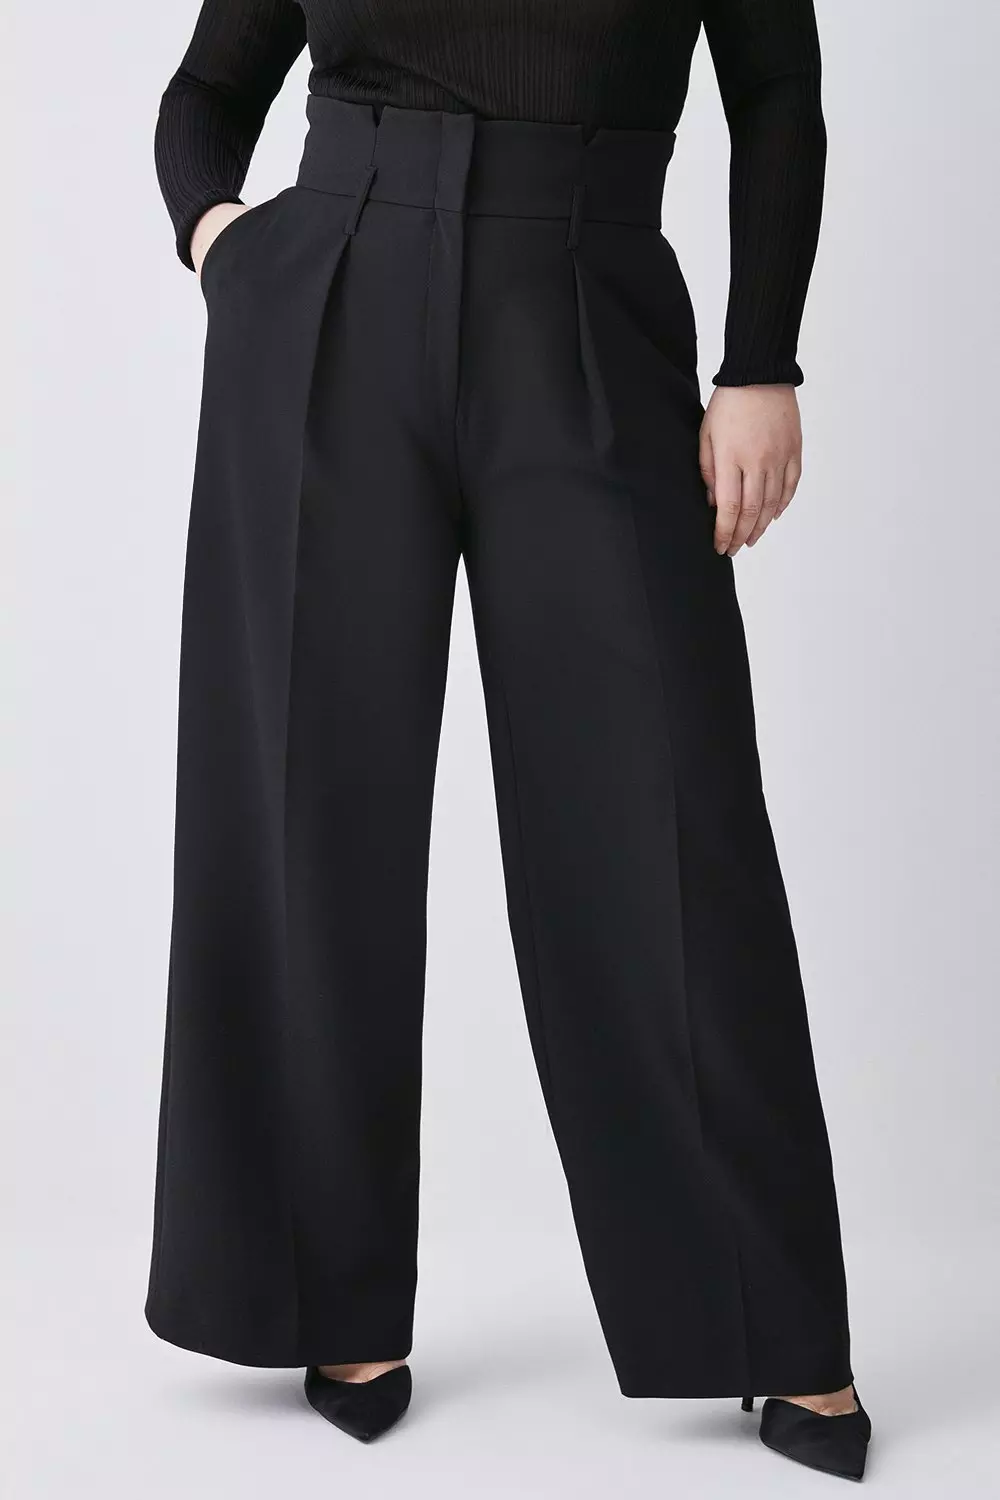 Buy High Waist Elegant Pants With Belt / High Waist Pants for